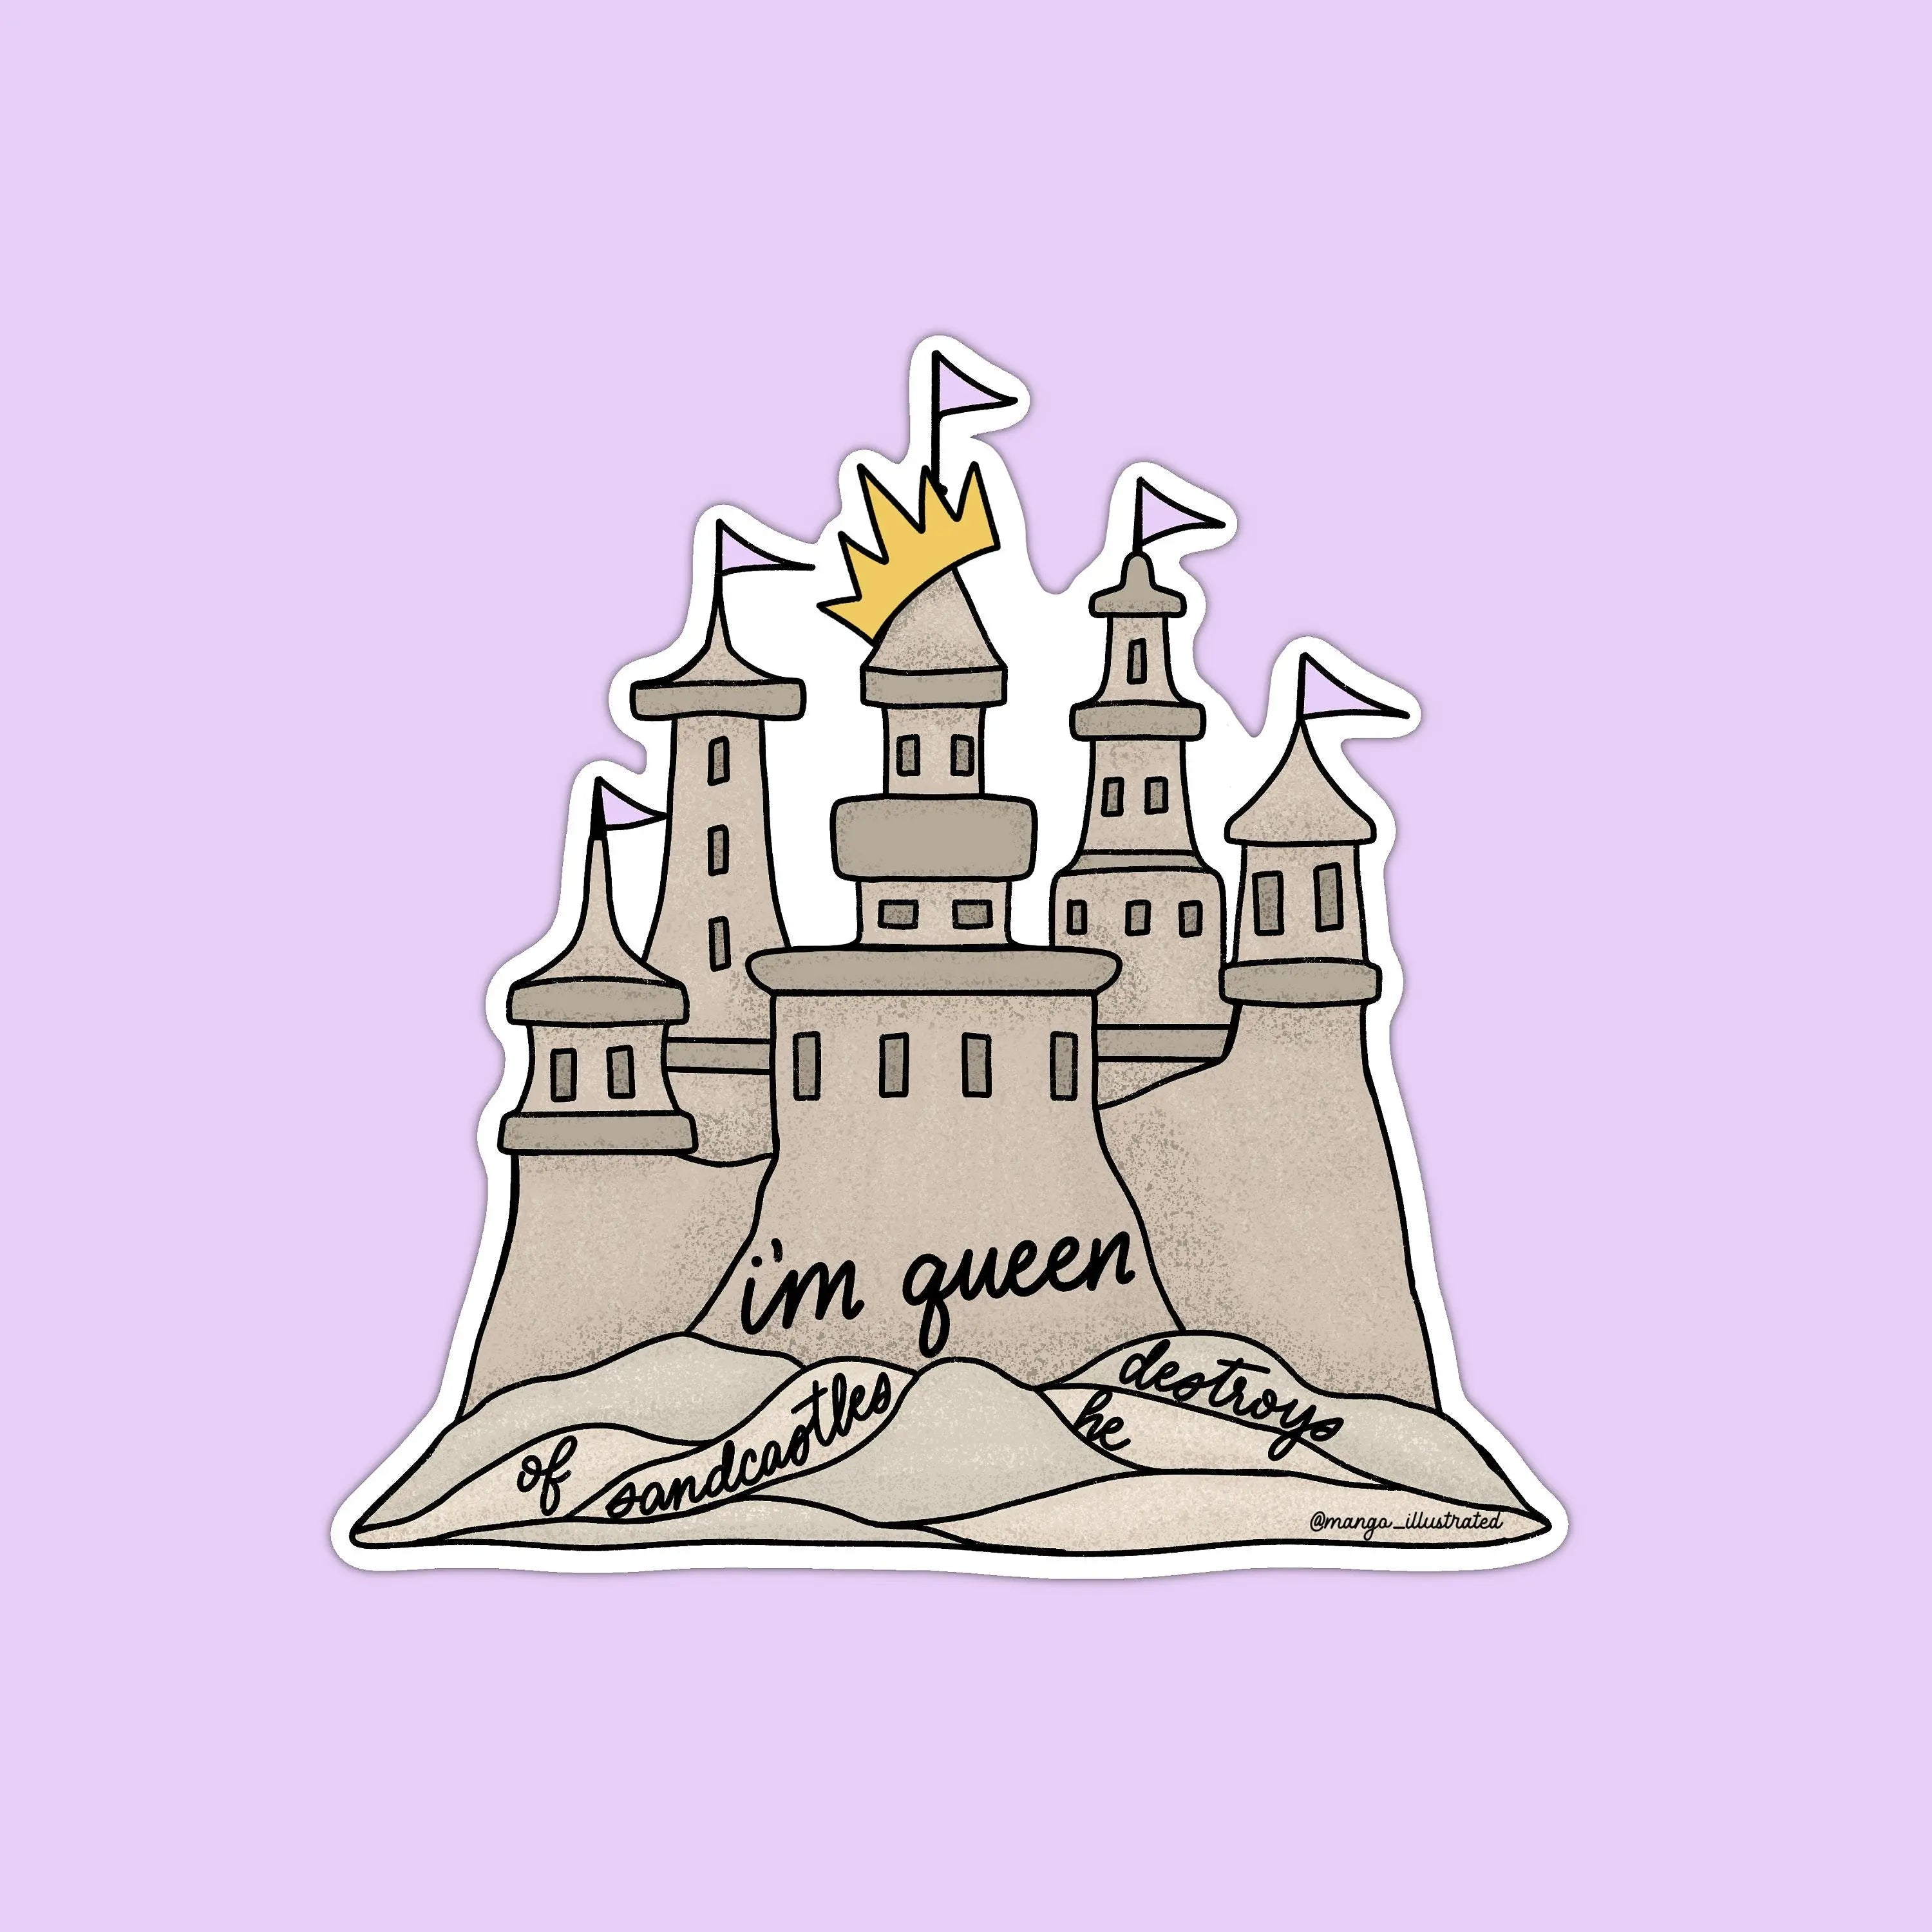 Queen of sandcastles sticker MangoIllustrated